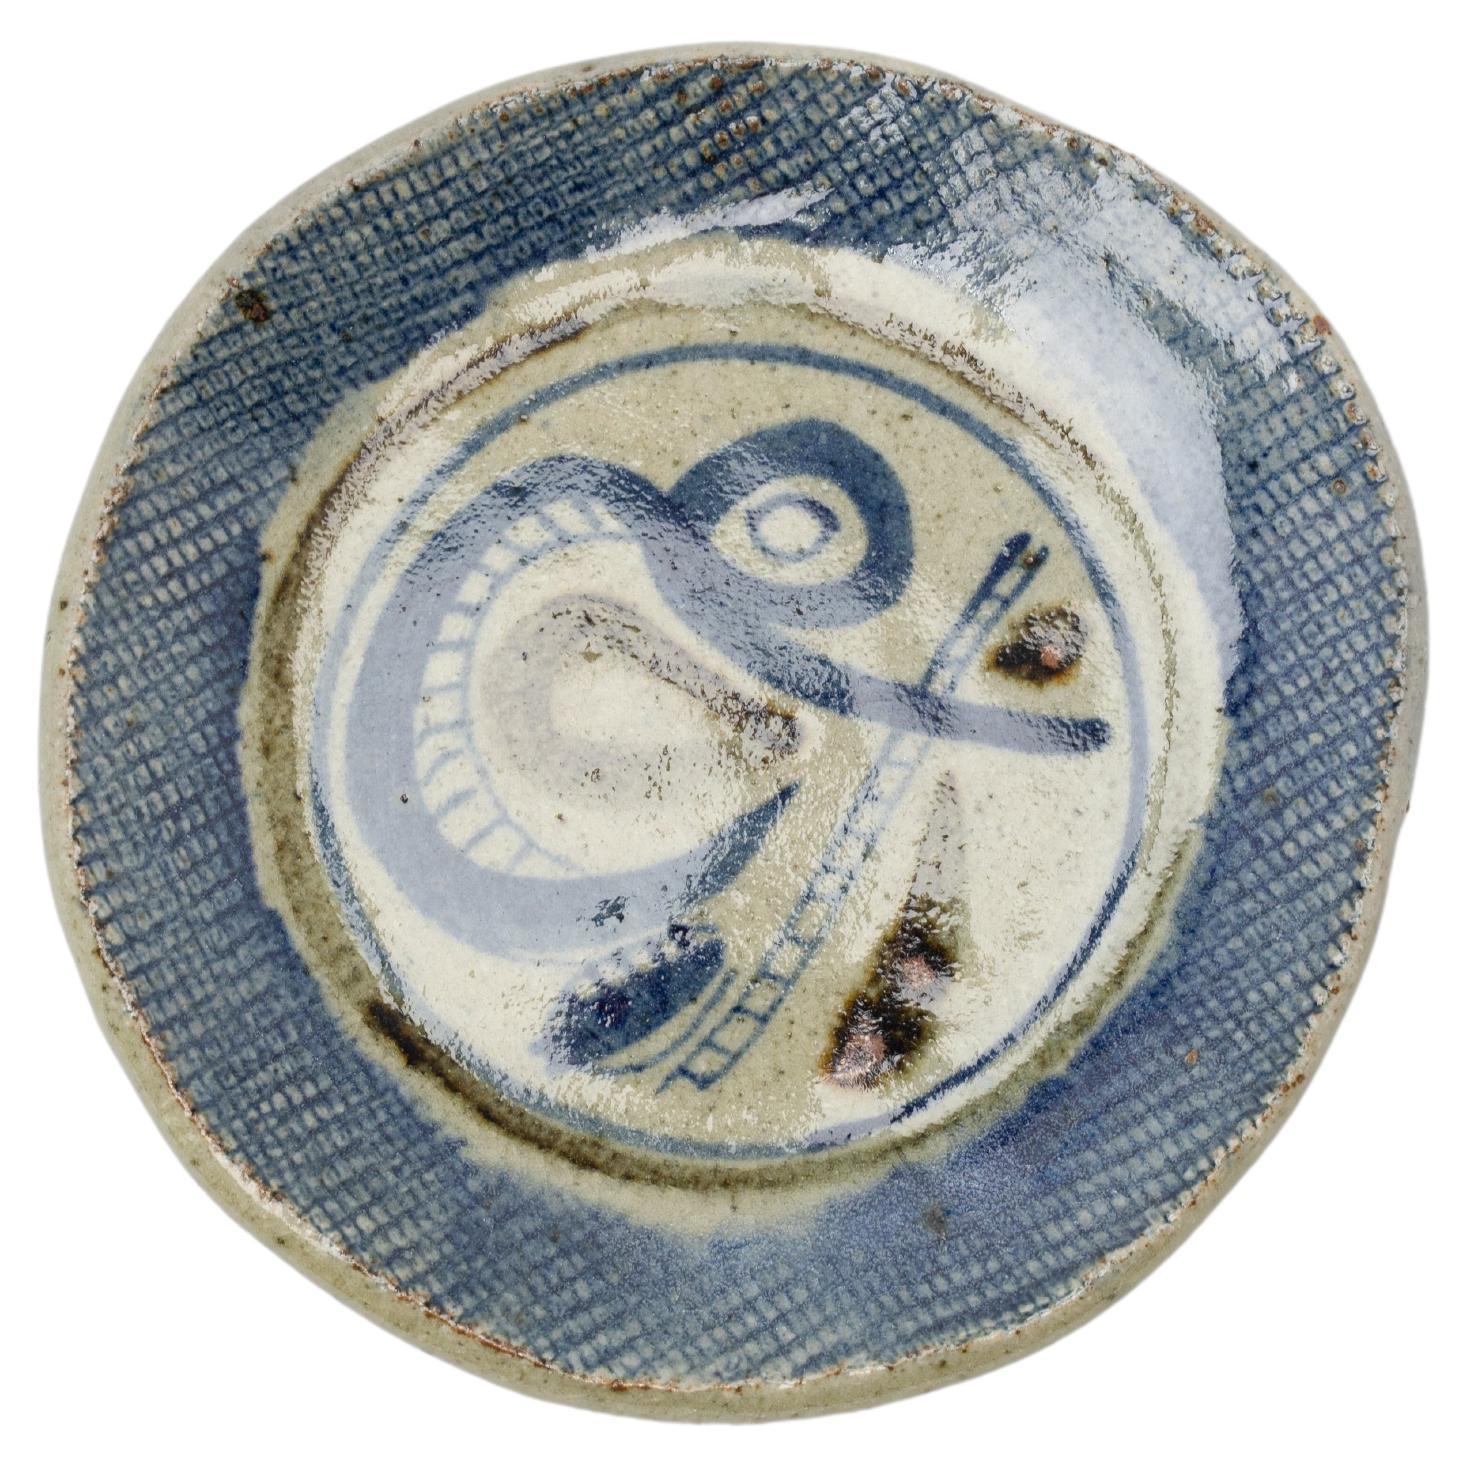 Japanisches handbemaltes Keramikmotiv mit abstraktem Miro-Motiv aus dem frühen 20. Jahrhundert